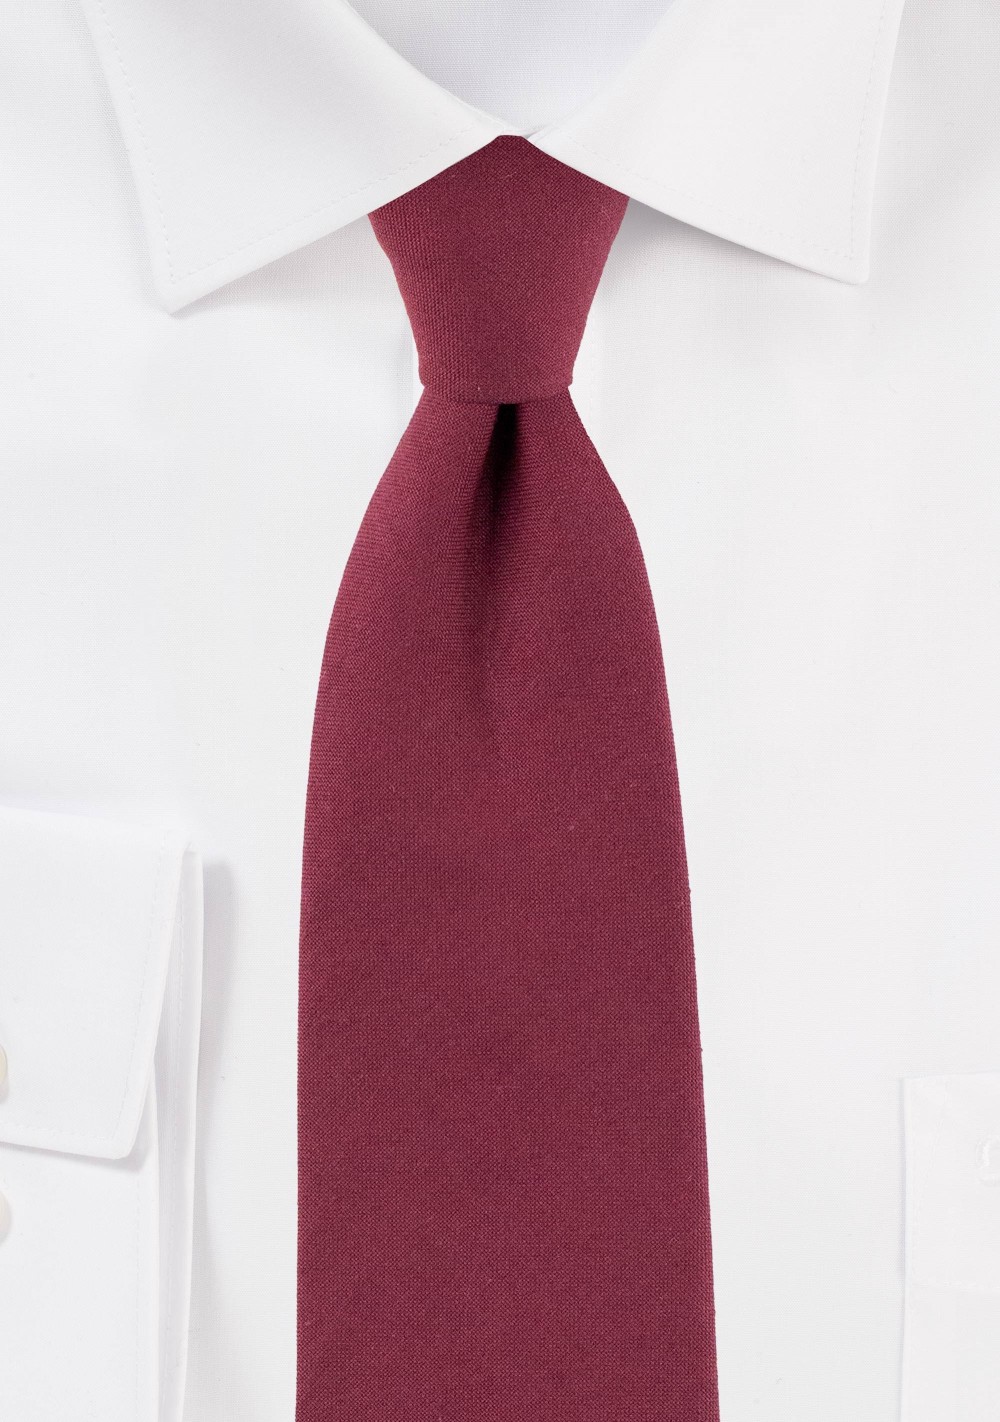 Solid Wine Red Slim Cut Mens Tie in Cotton